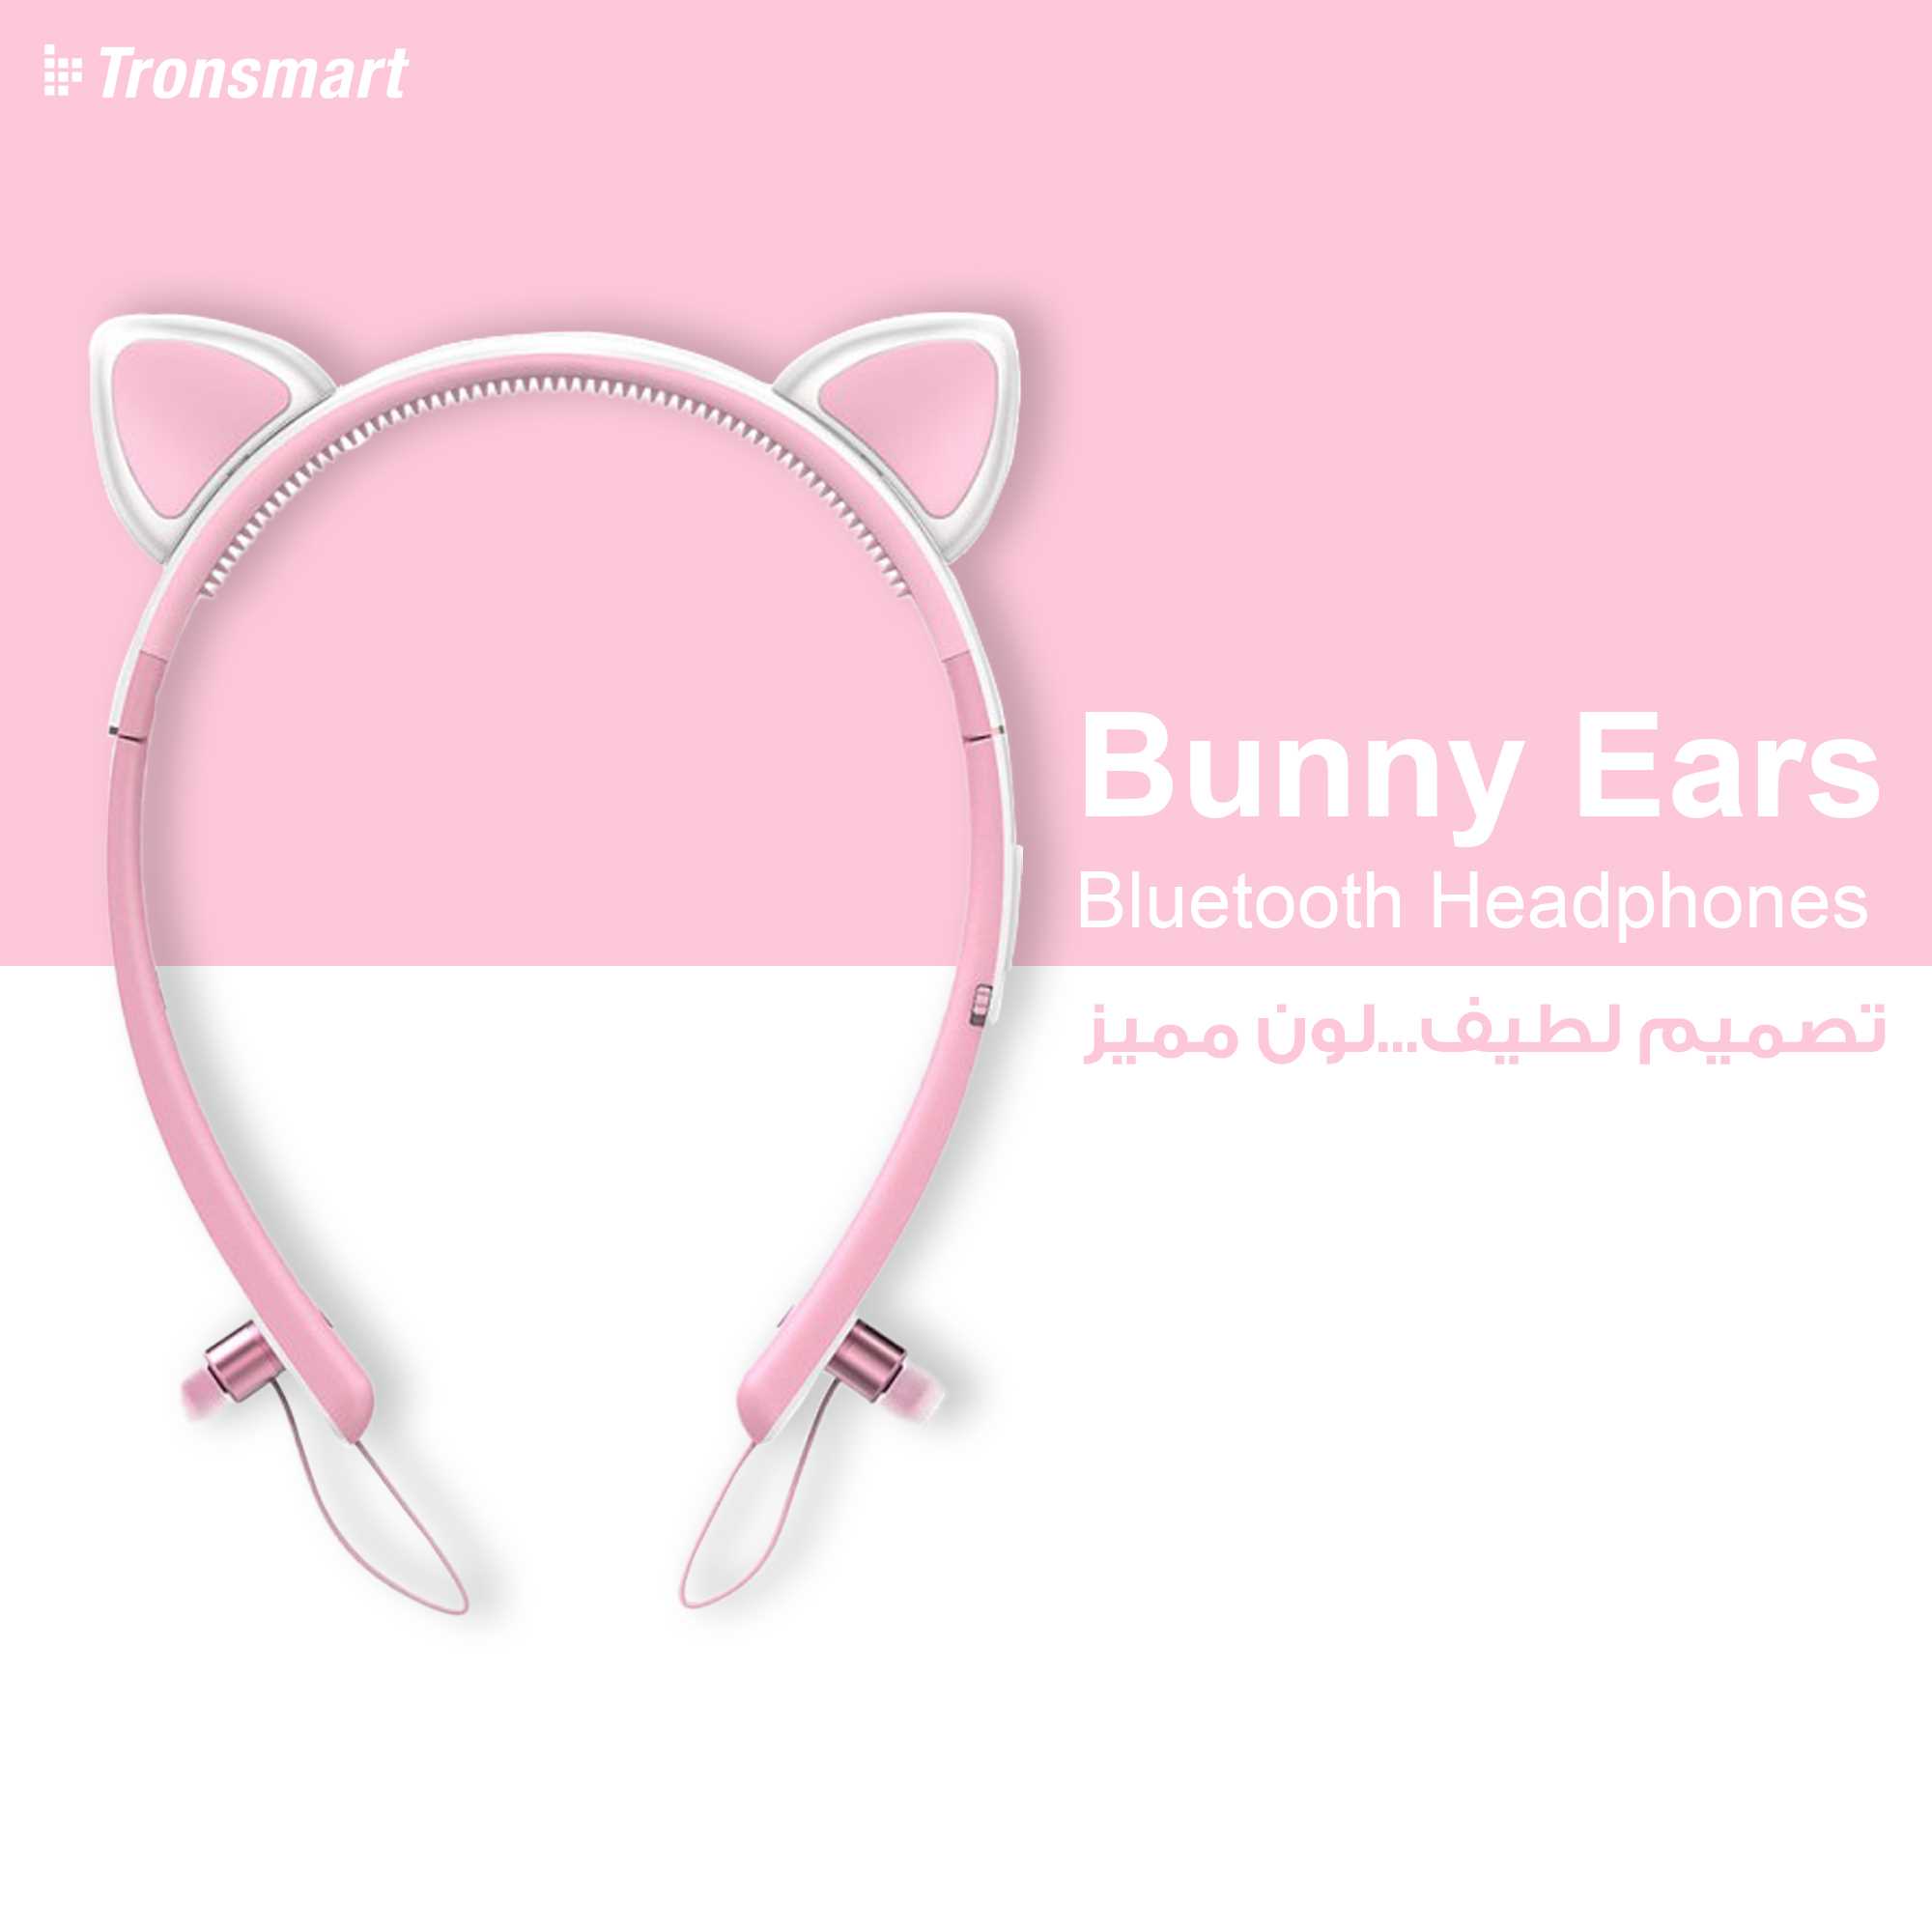 Bunny Ears Bluetooth Headphones